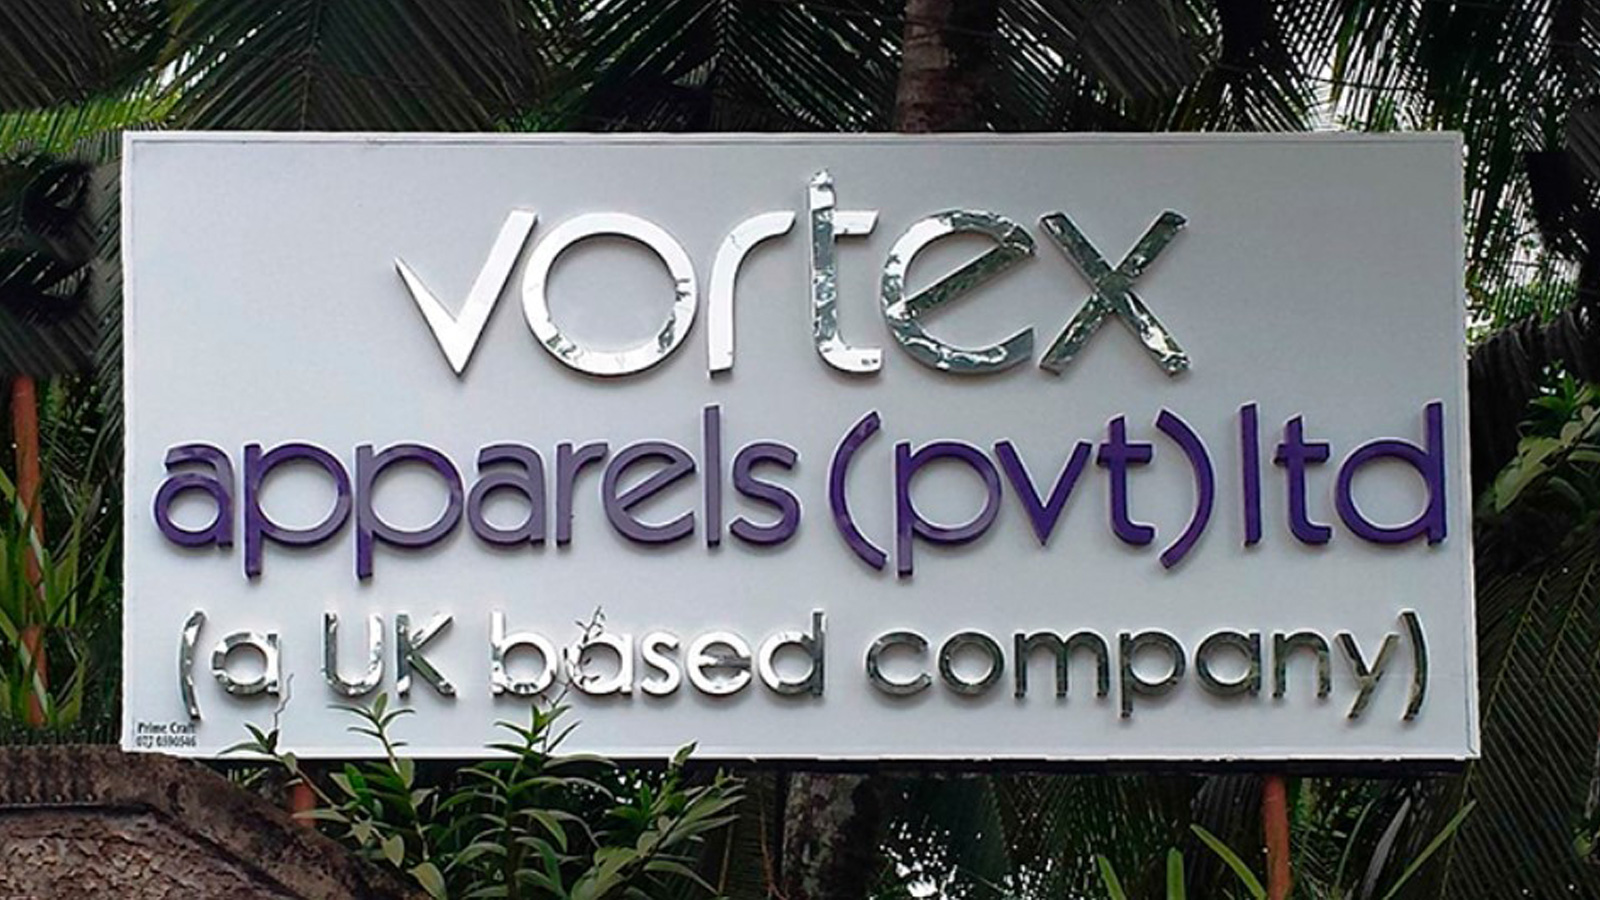 VORTEX APPARELS PVT LTD